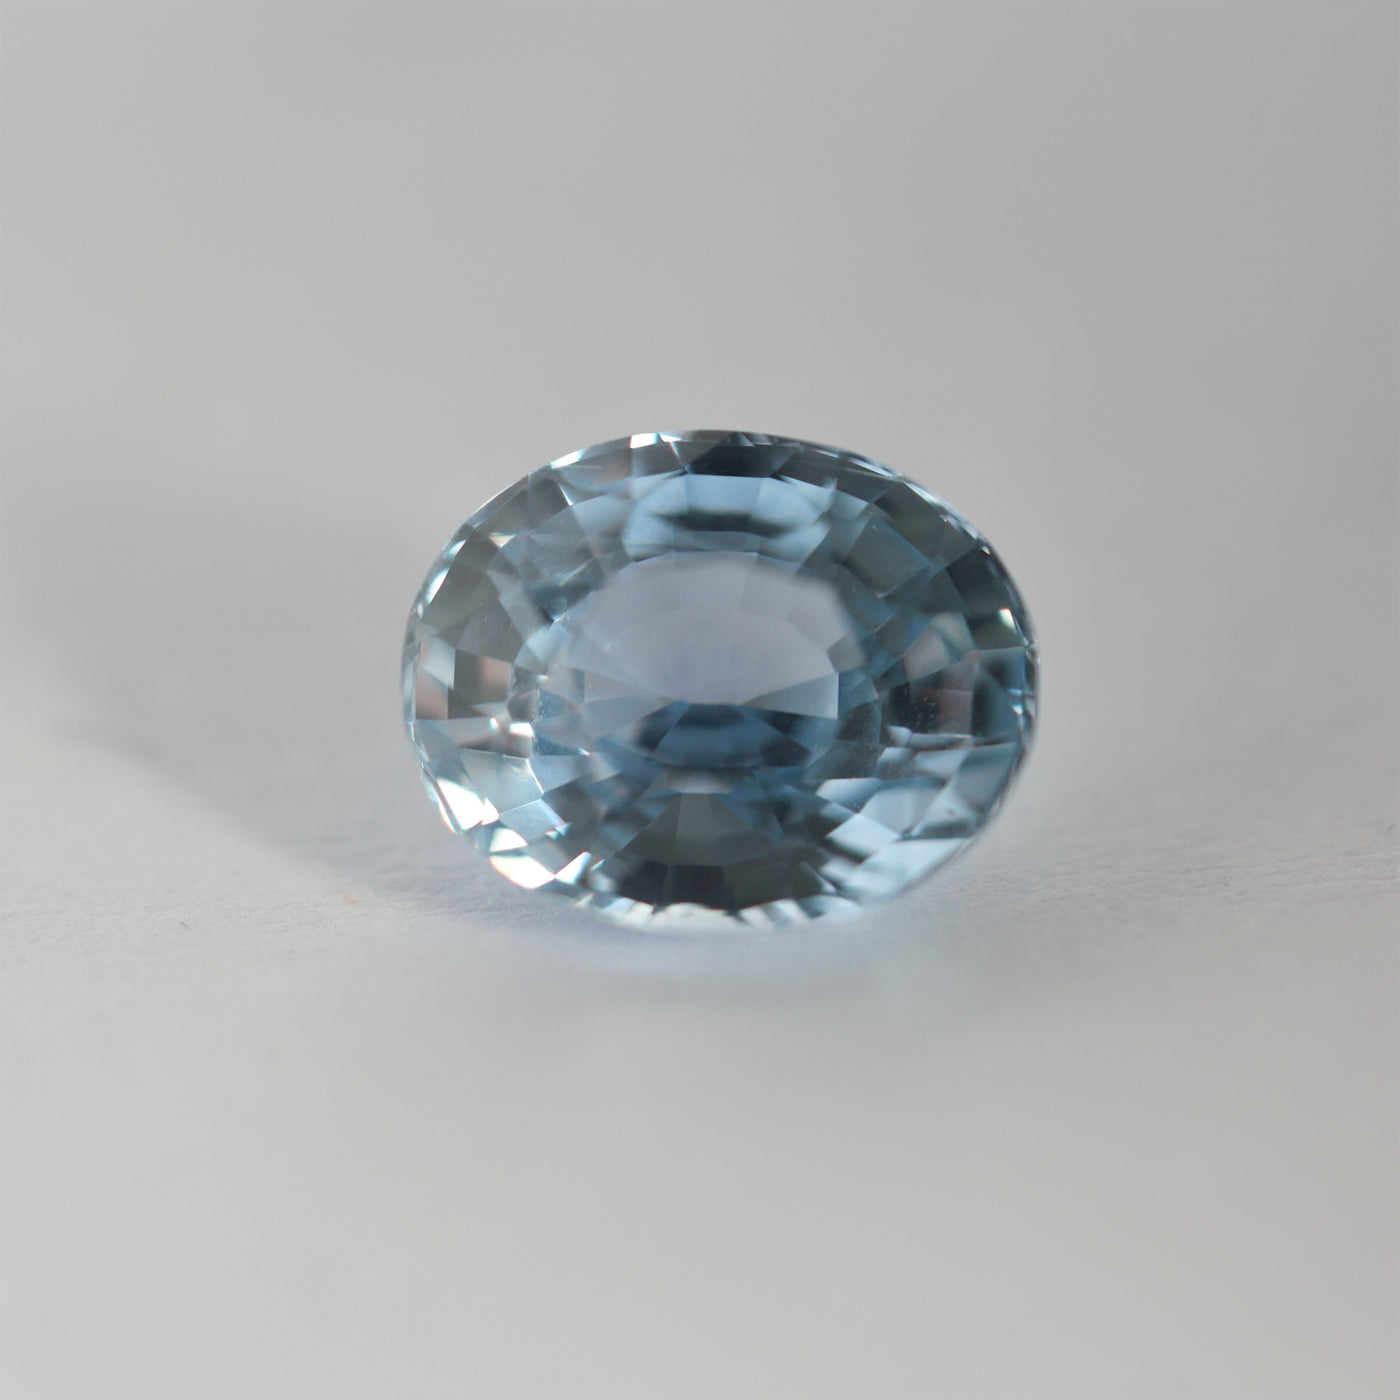 Loose oval-shaped blue sapphire